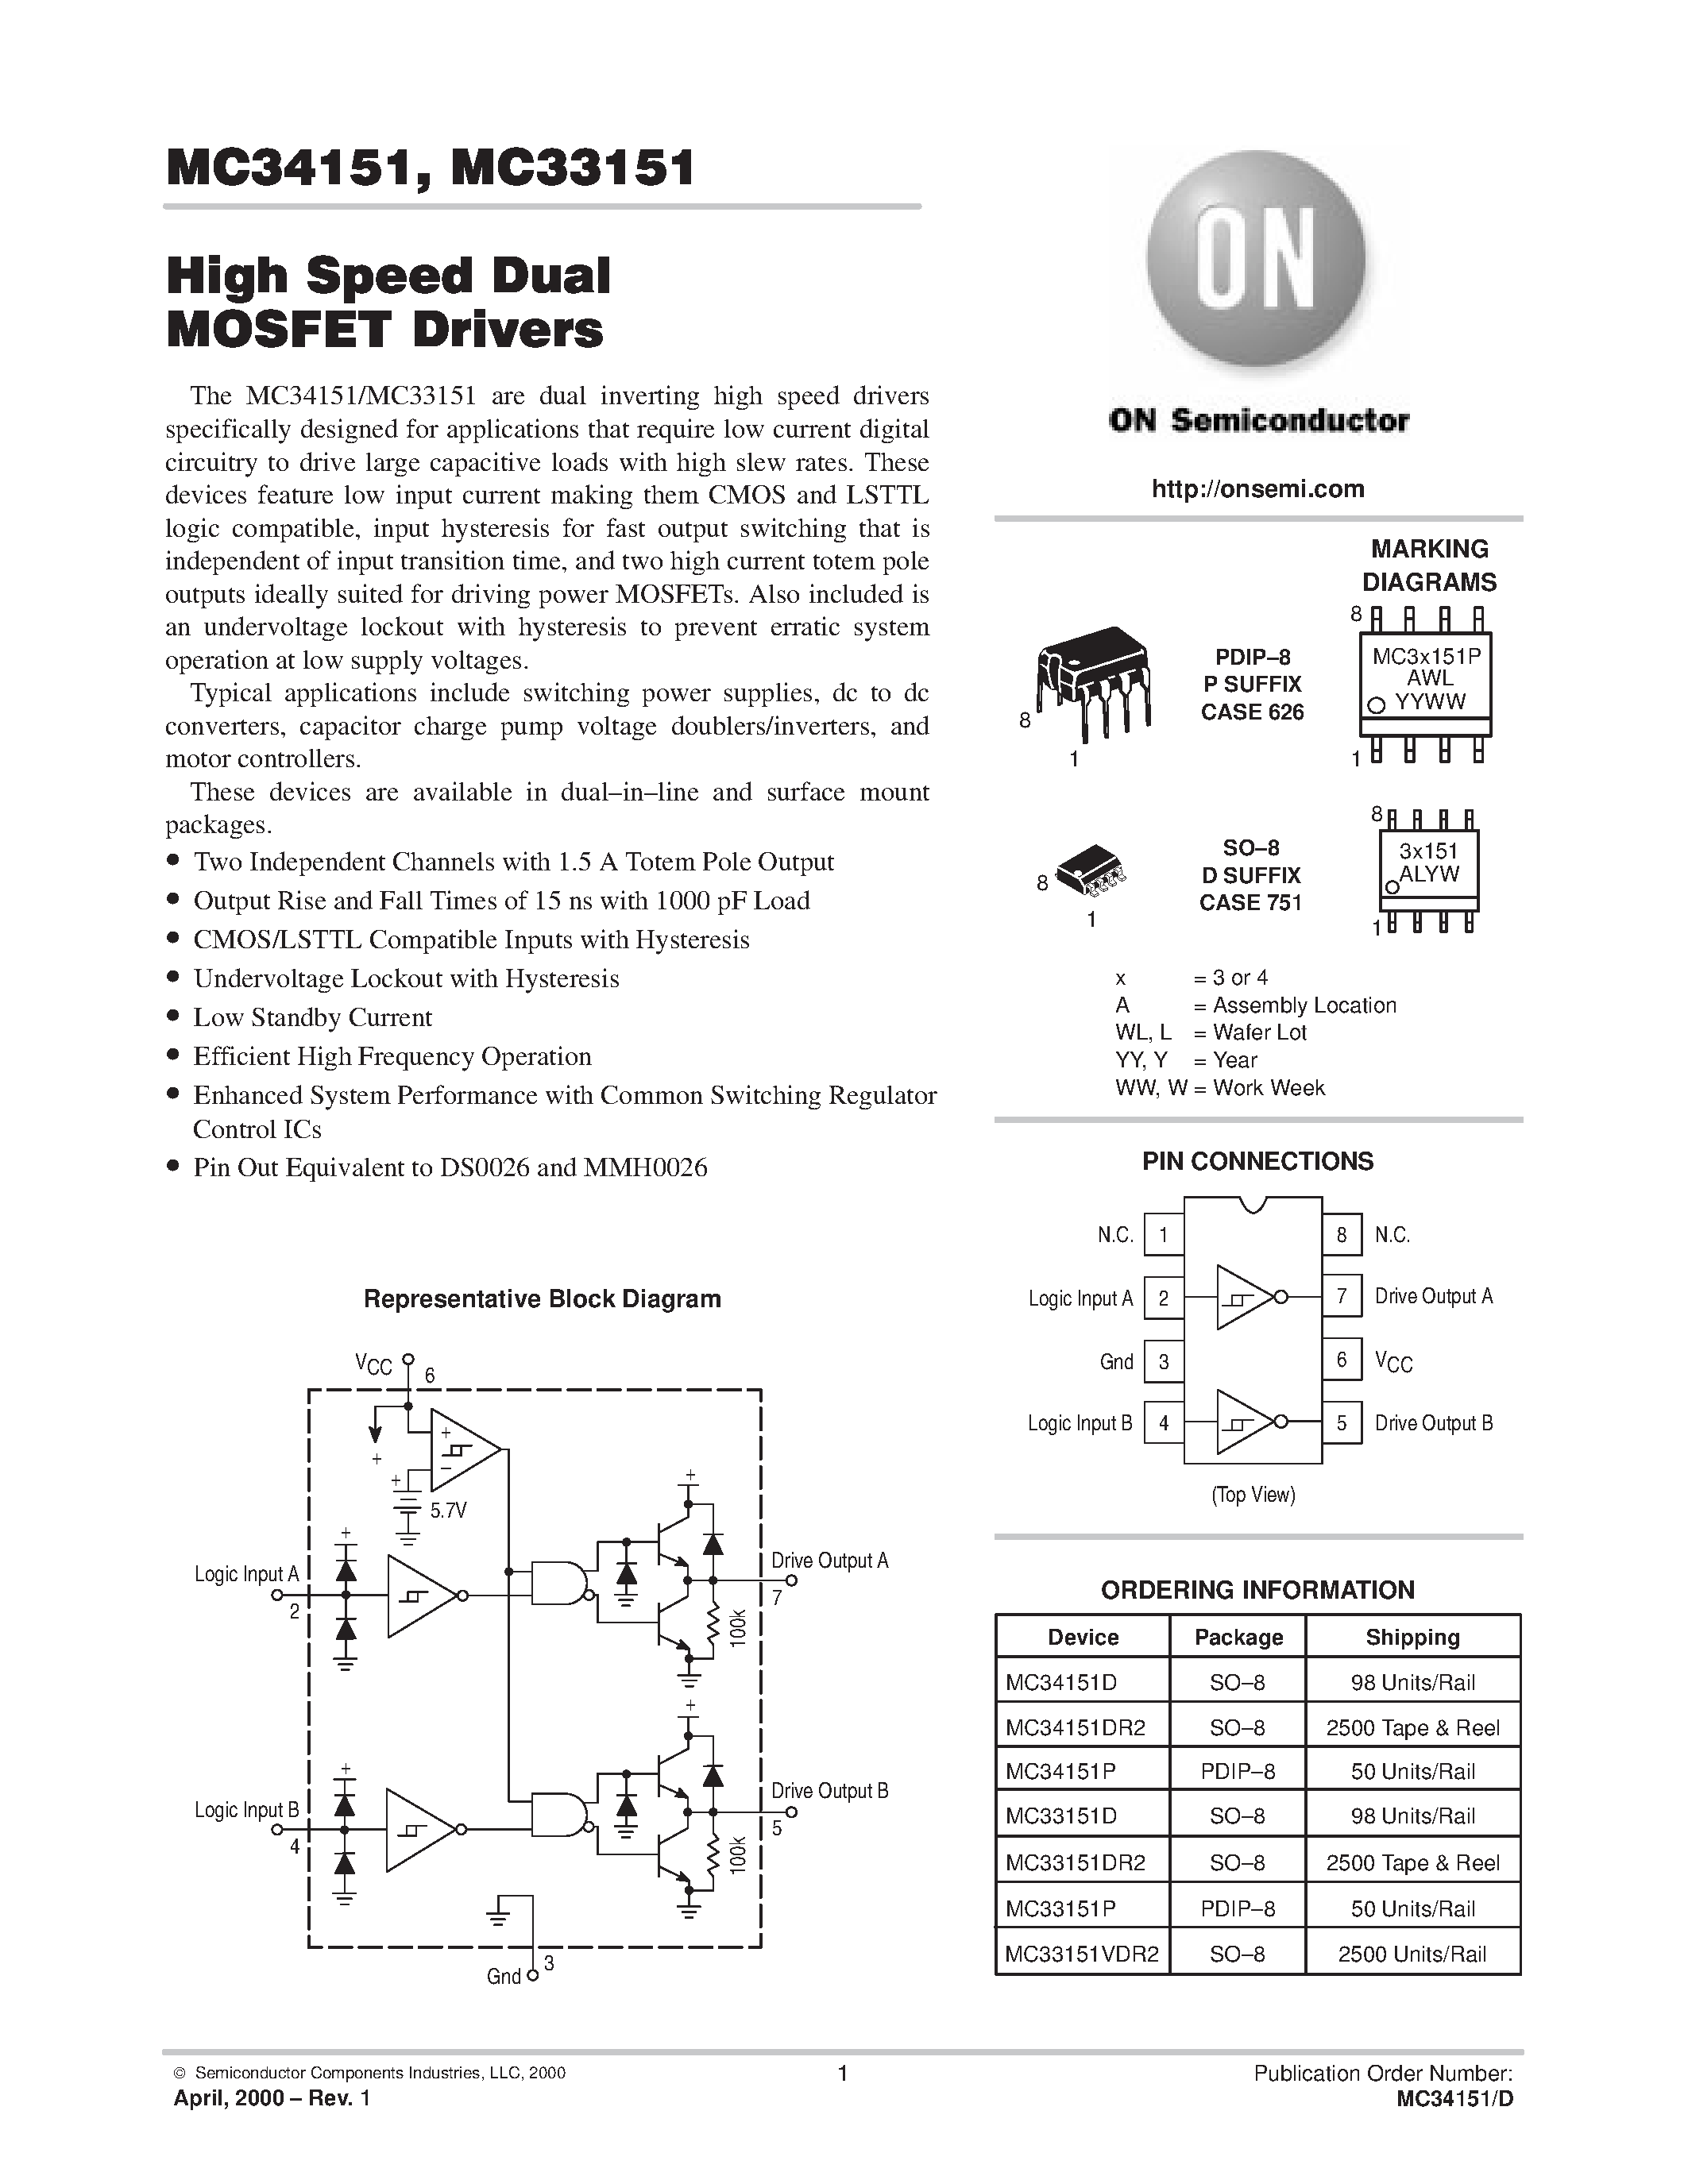 Datasheet MC33151 - (MC34151 / MC33151) High Speed Dual MOSFET Drivers page 1